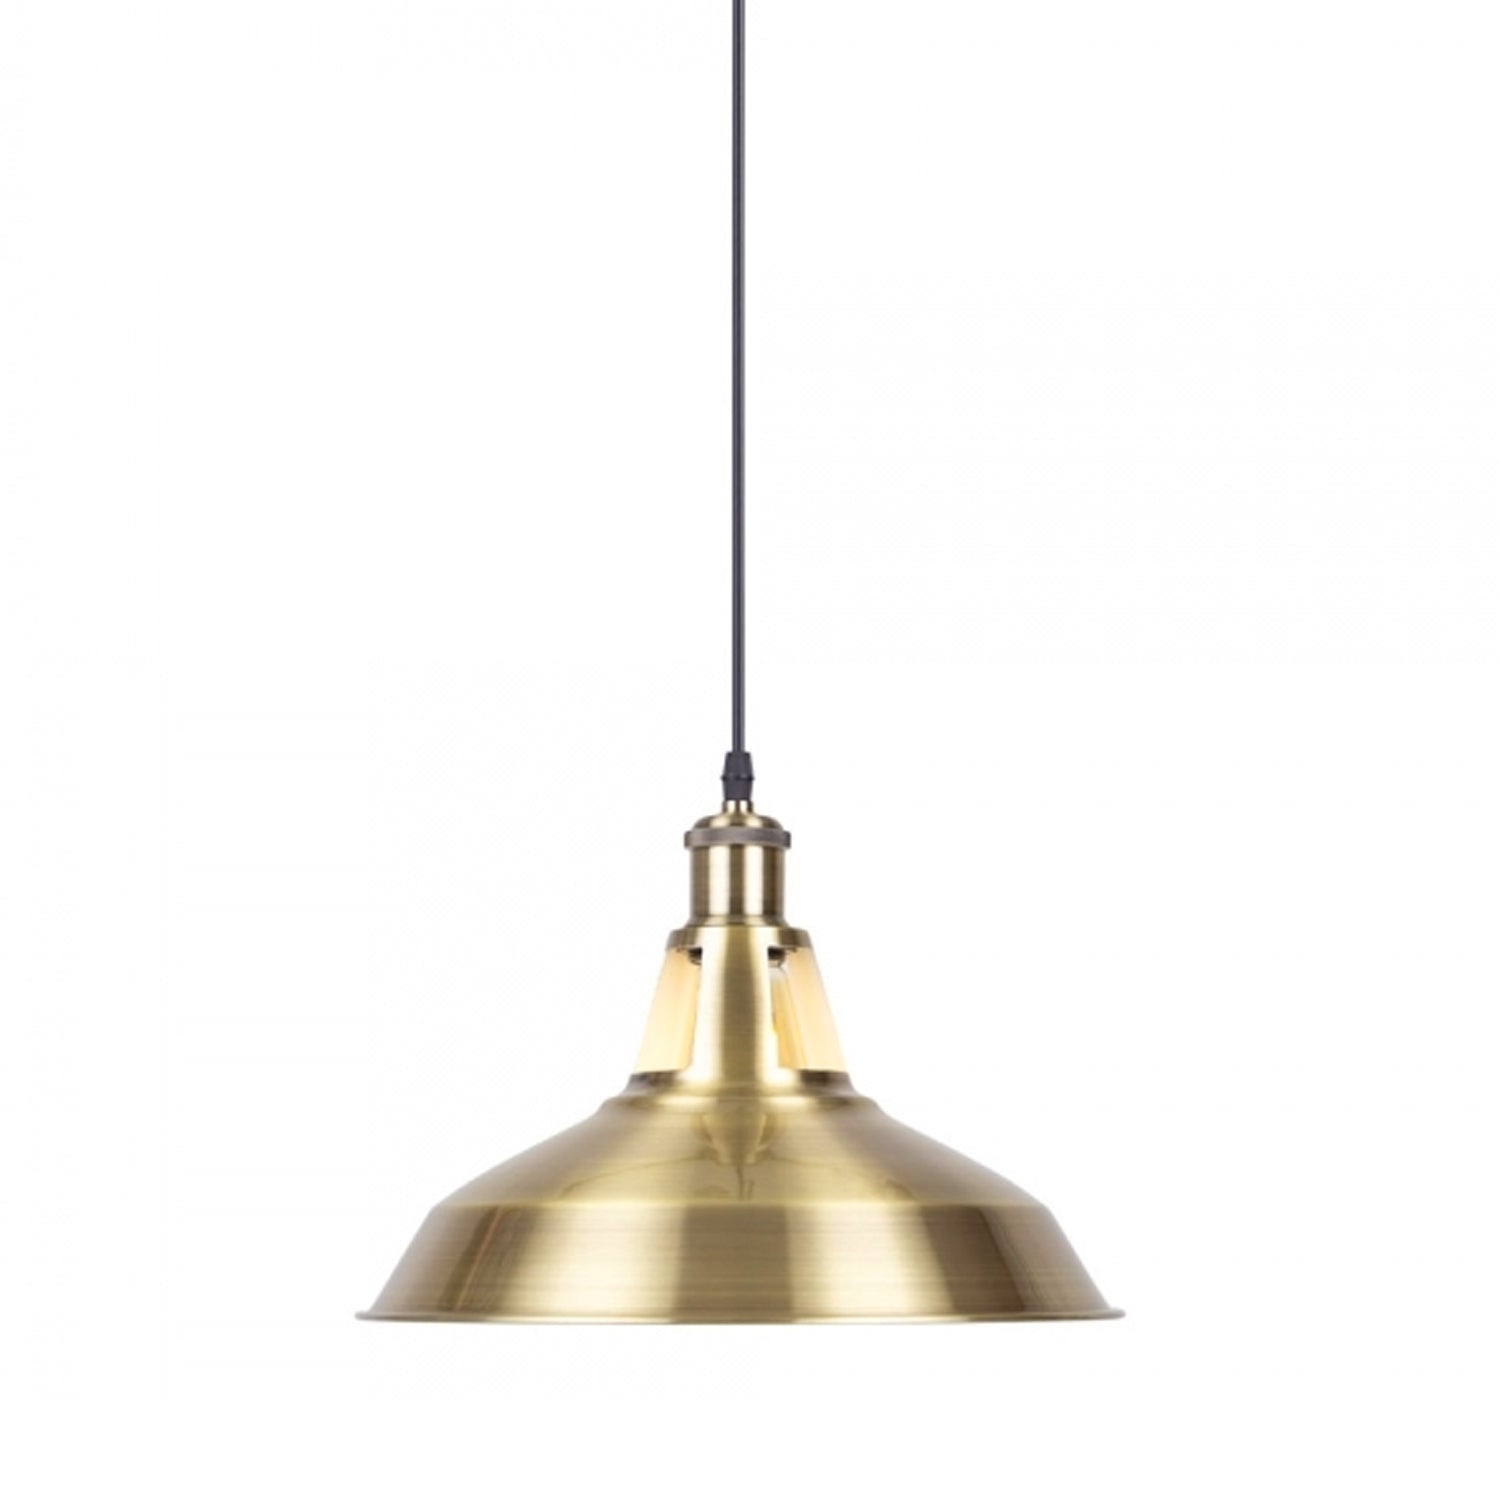  Industrial Metal Ceiling Pendant Light Shade Modern Hanging Retro Lights